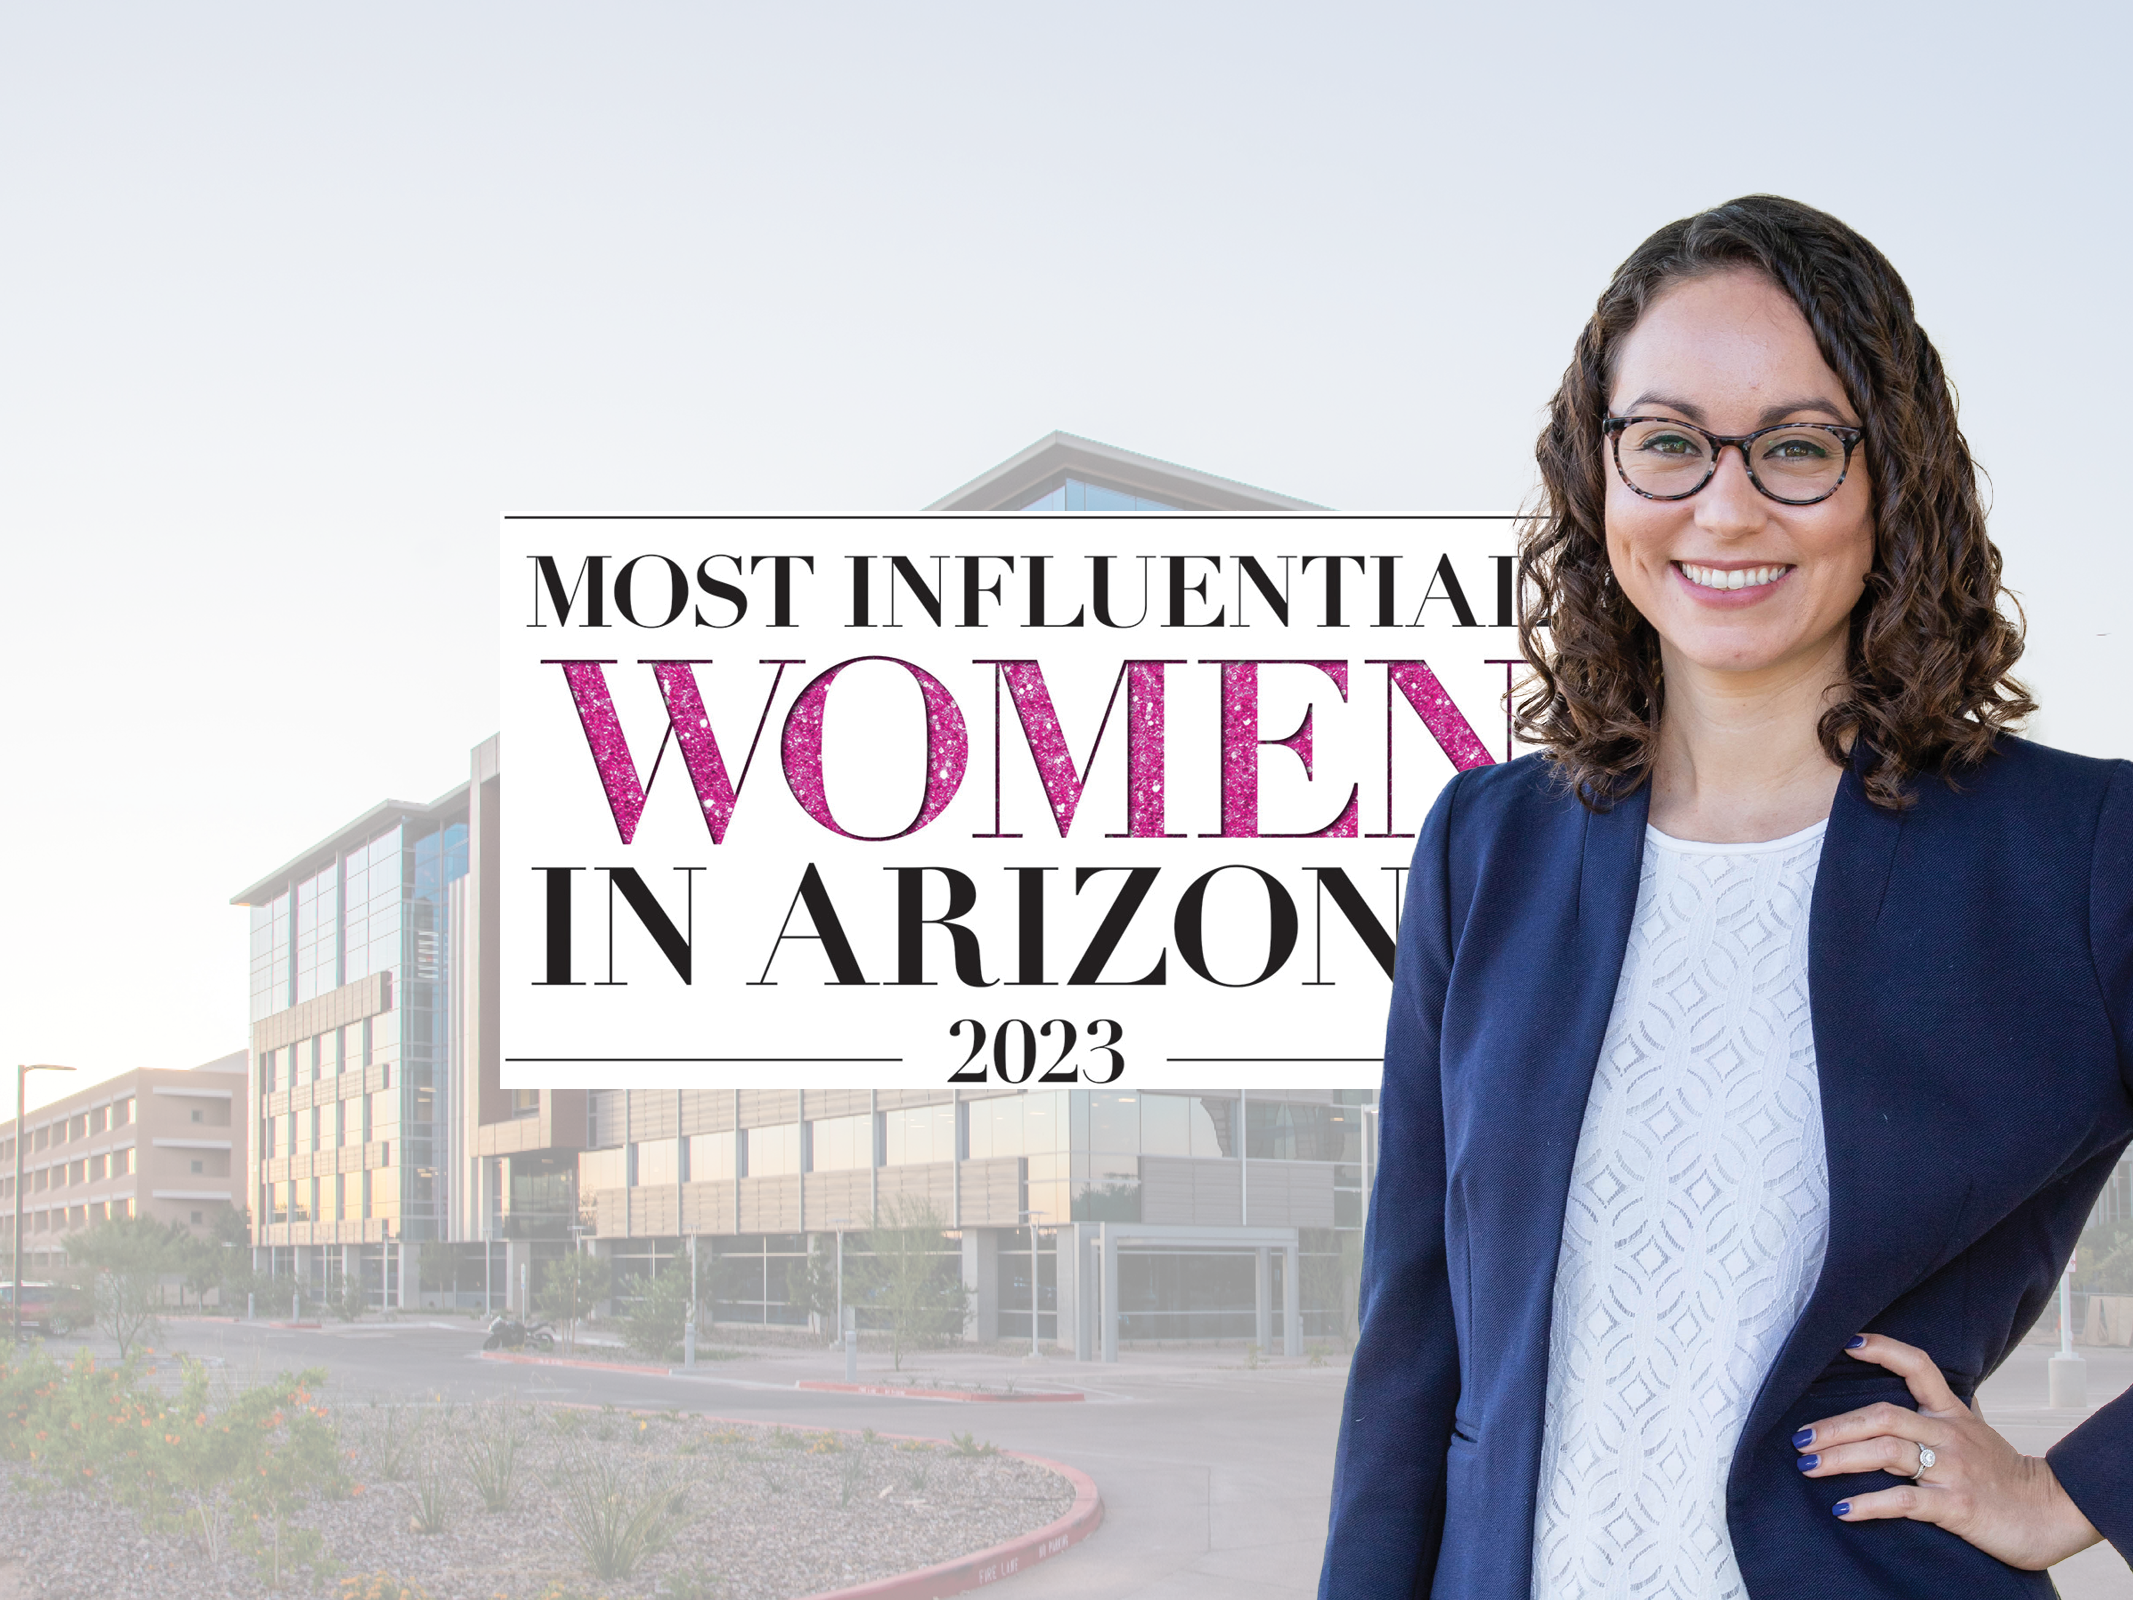 Most influential women in arizona.